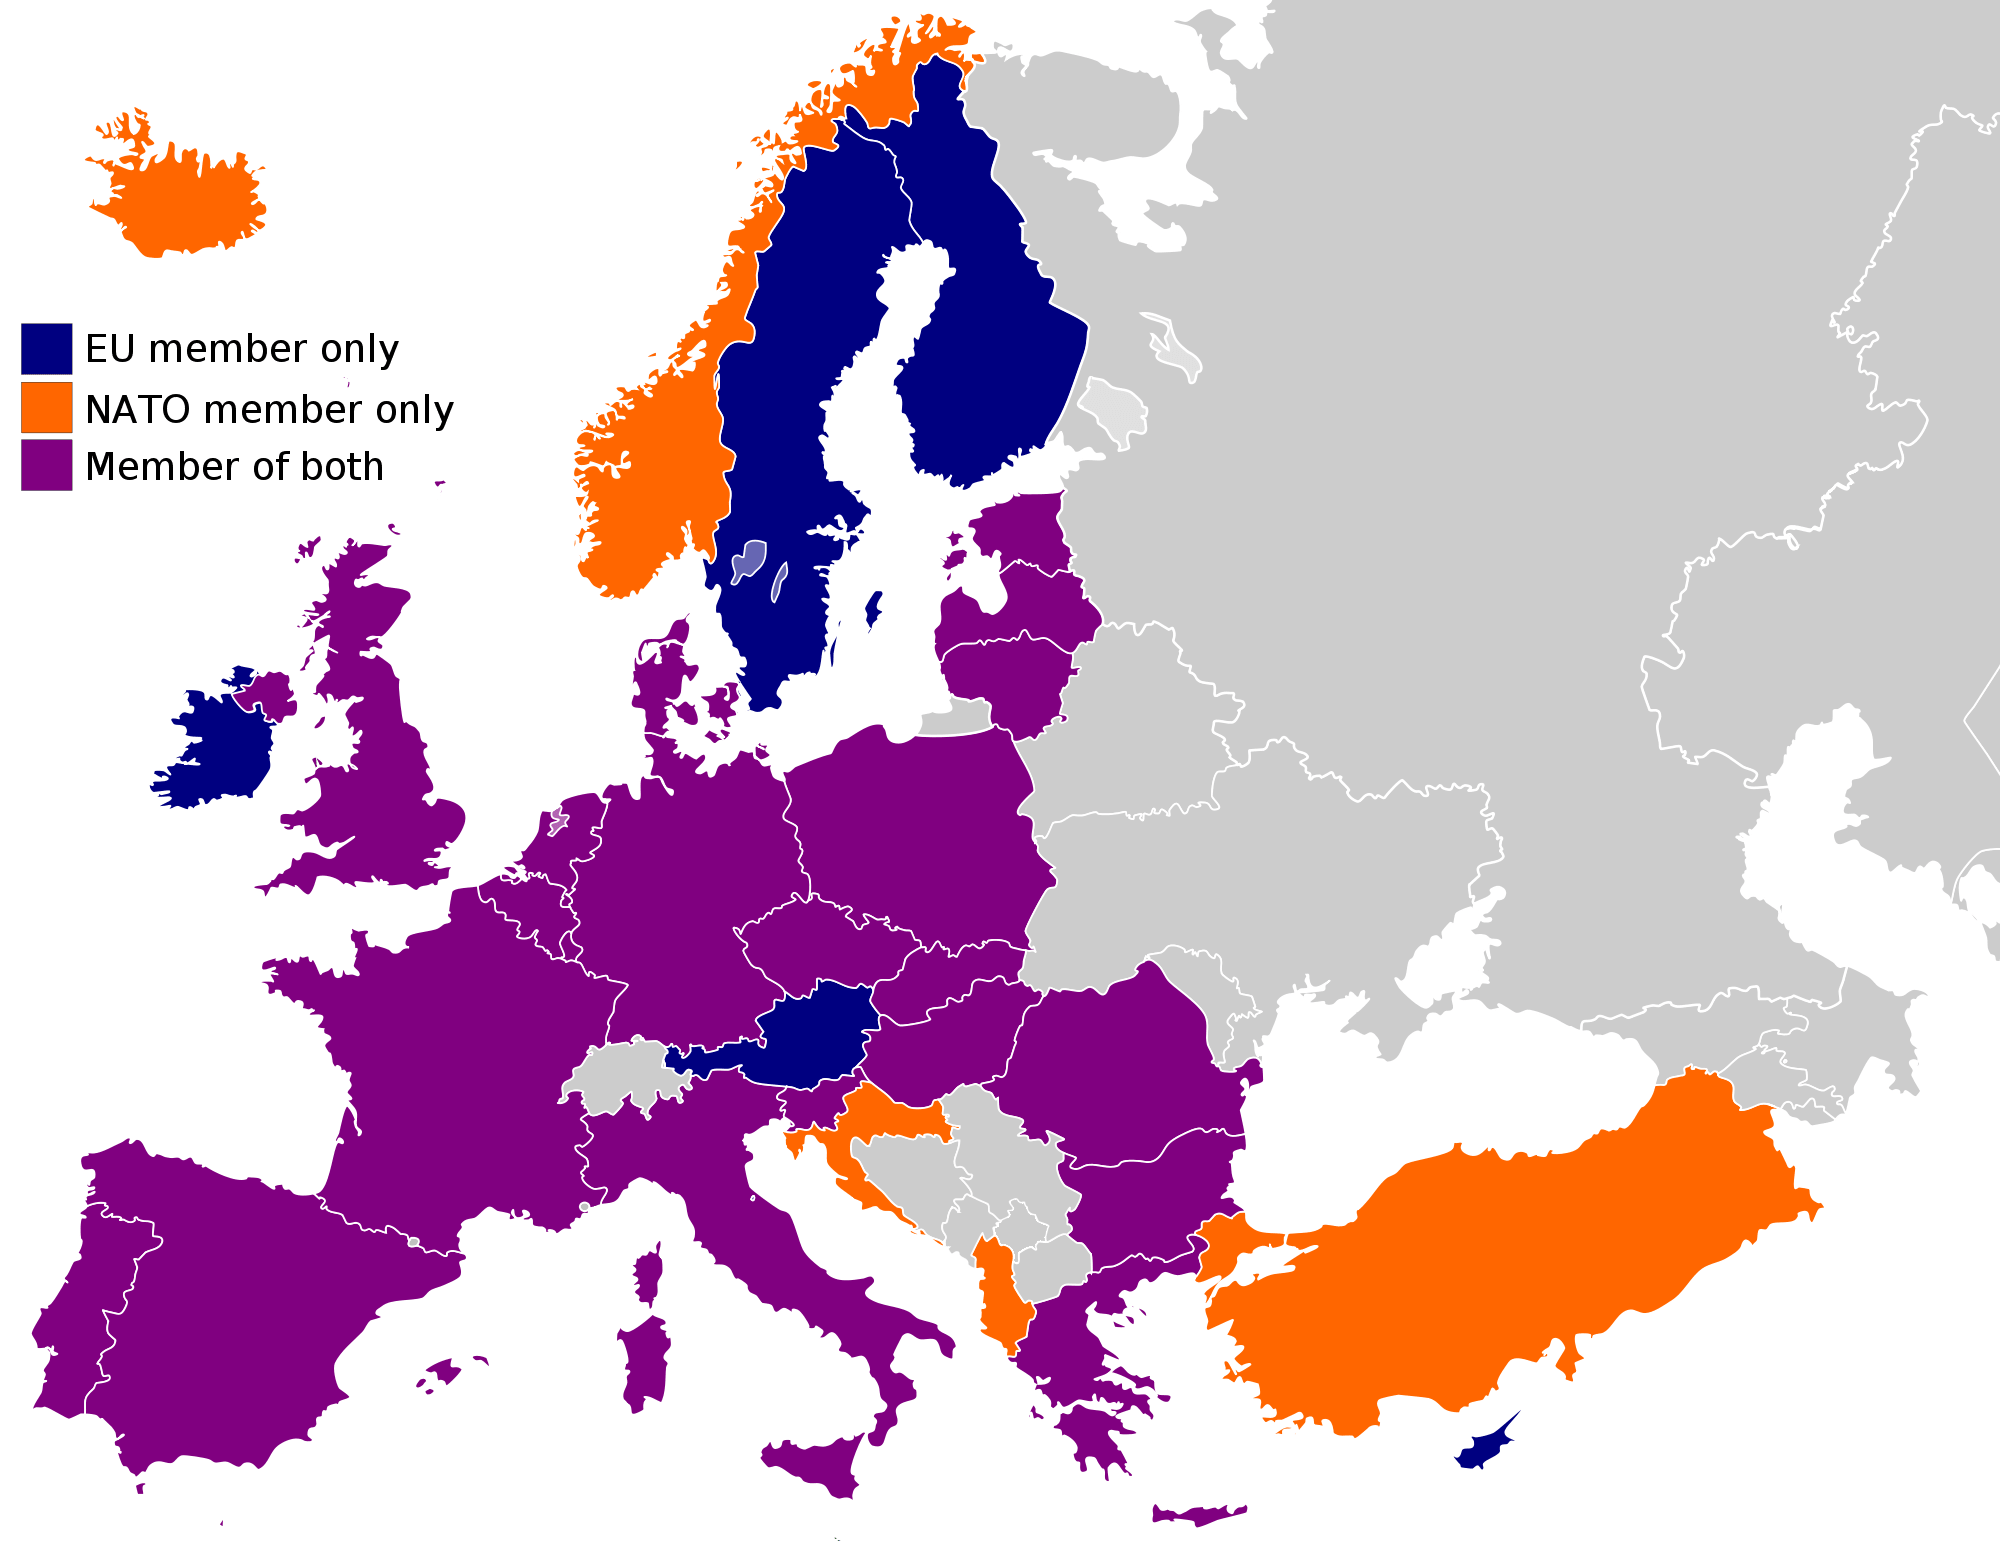 membership von europaan union 2009